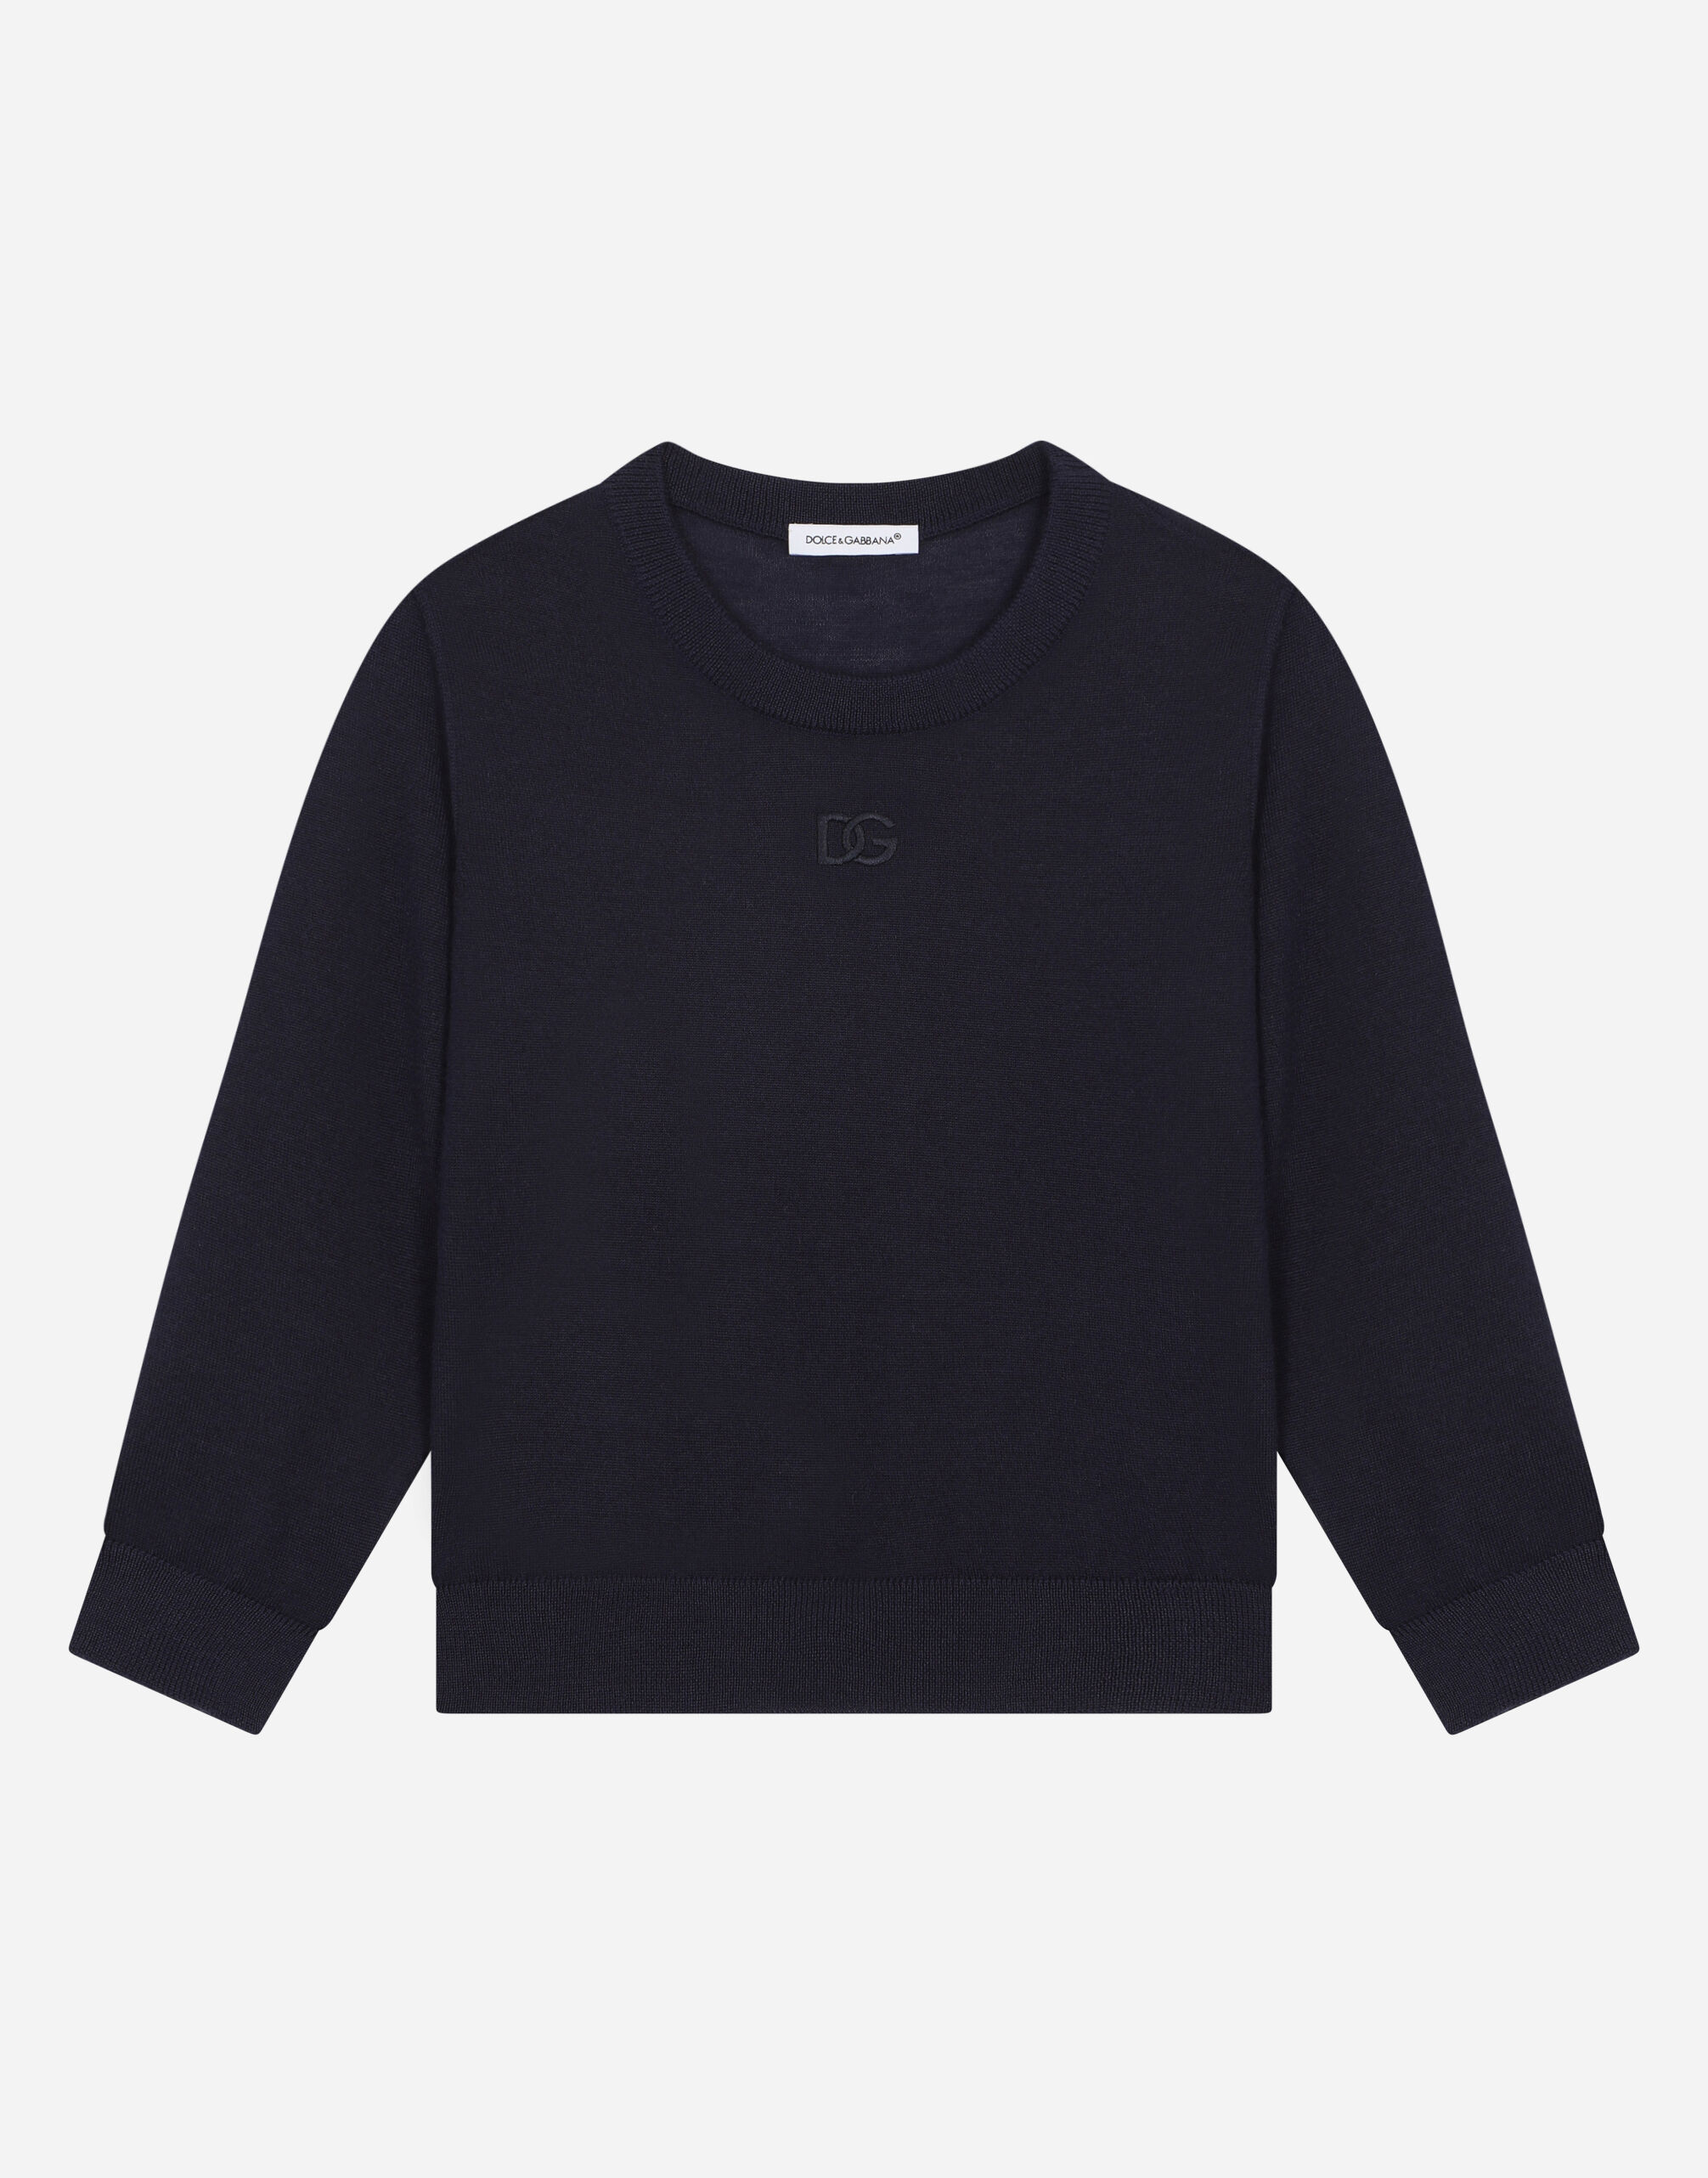 Dolce & Gabbana Cashmere round-neck sweater with DG logo embroidery Beige L4KWE2JBCE0